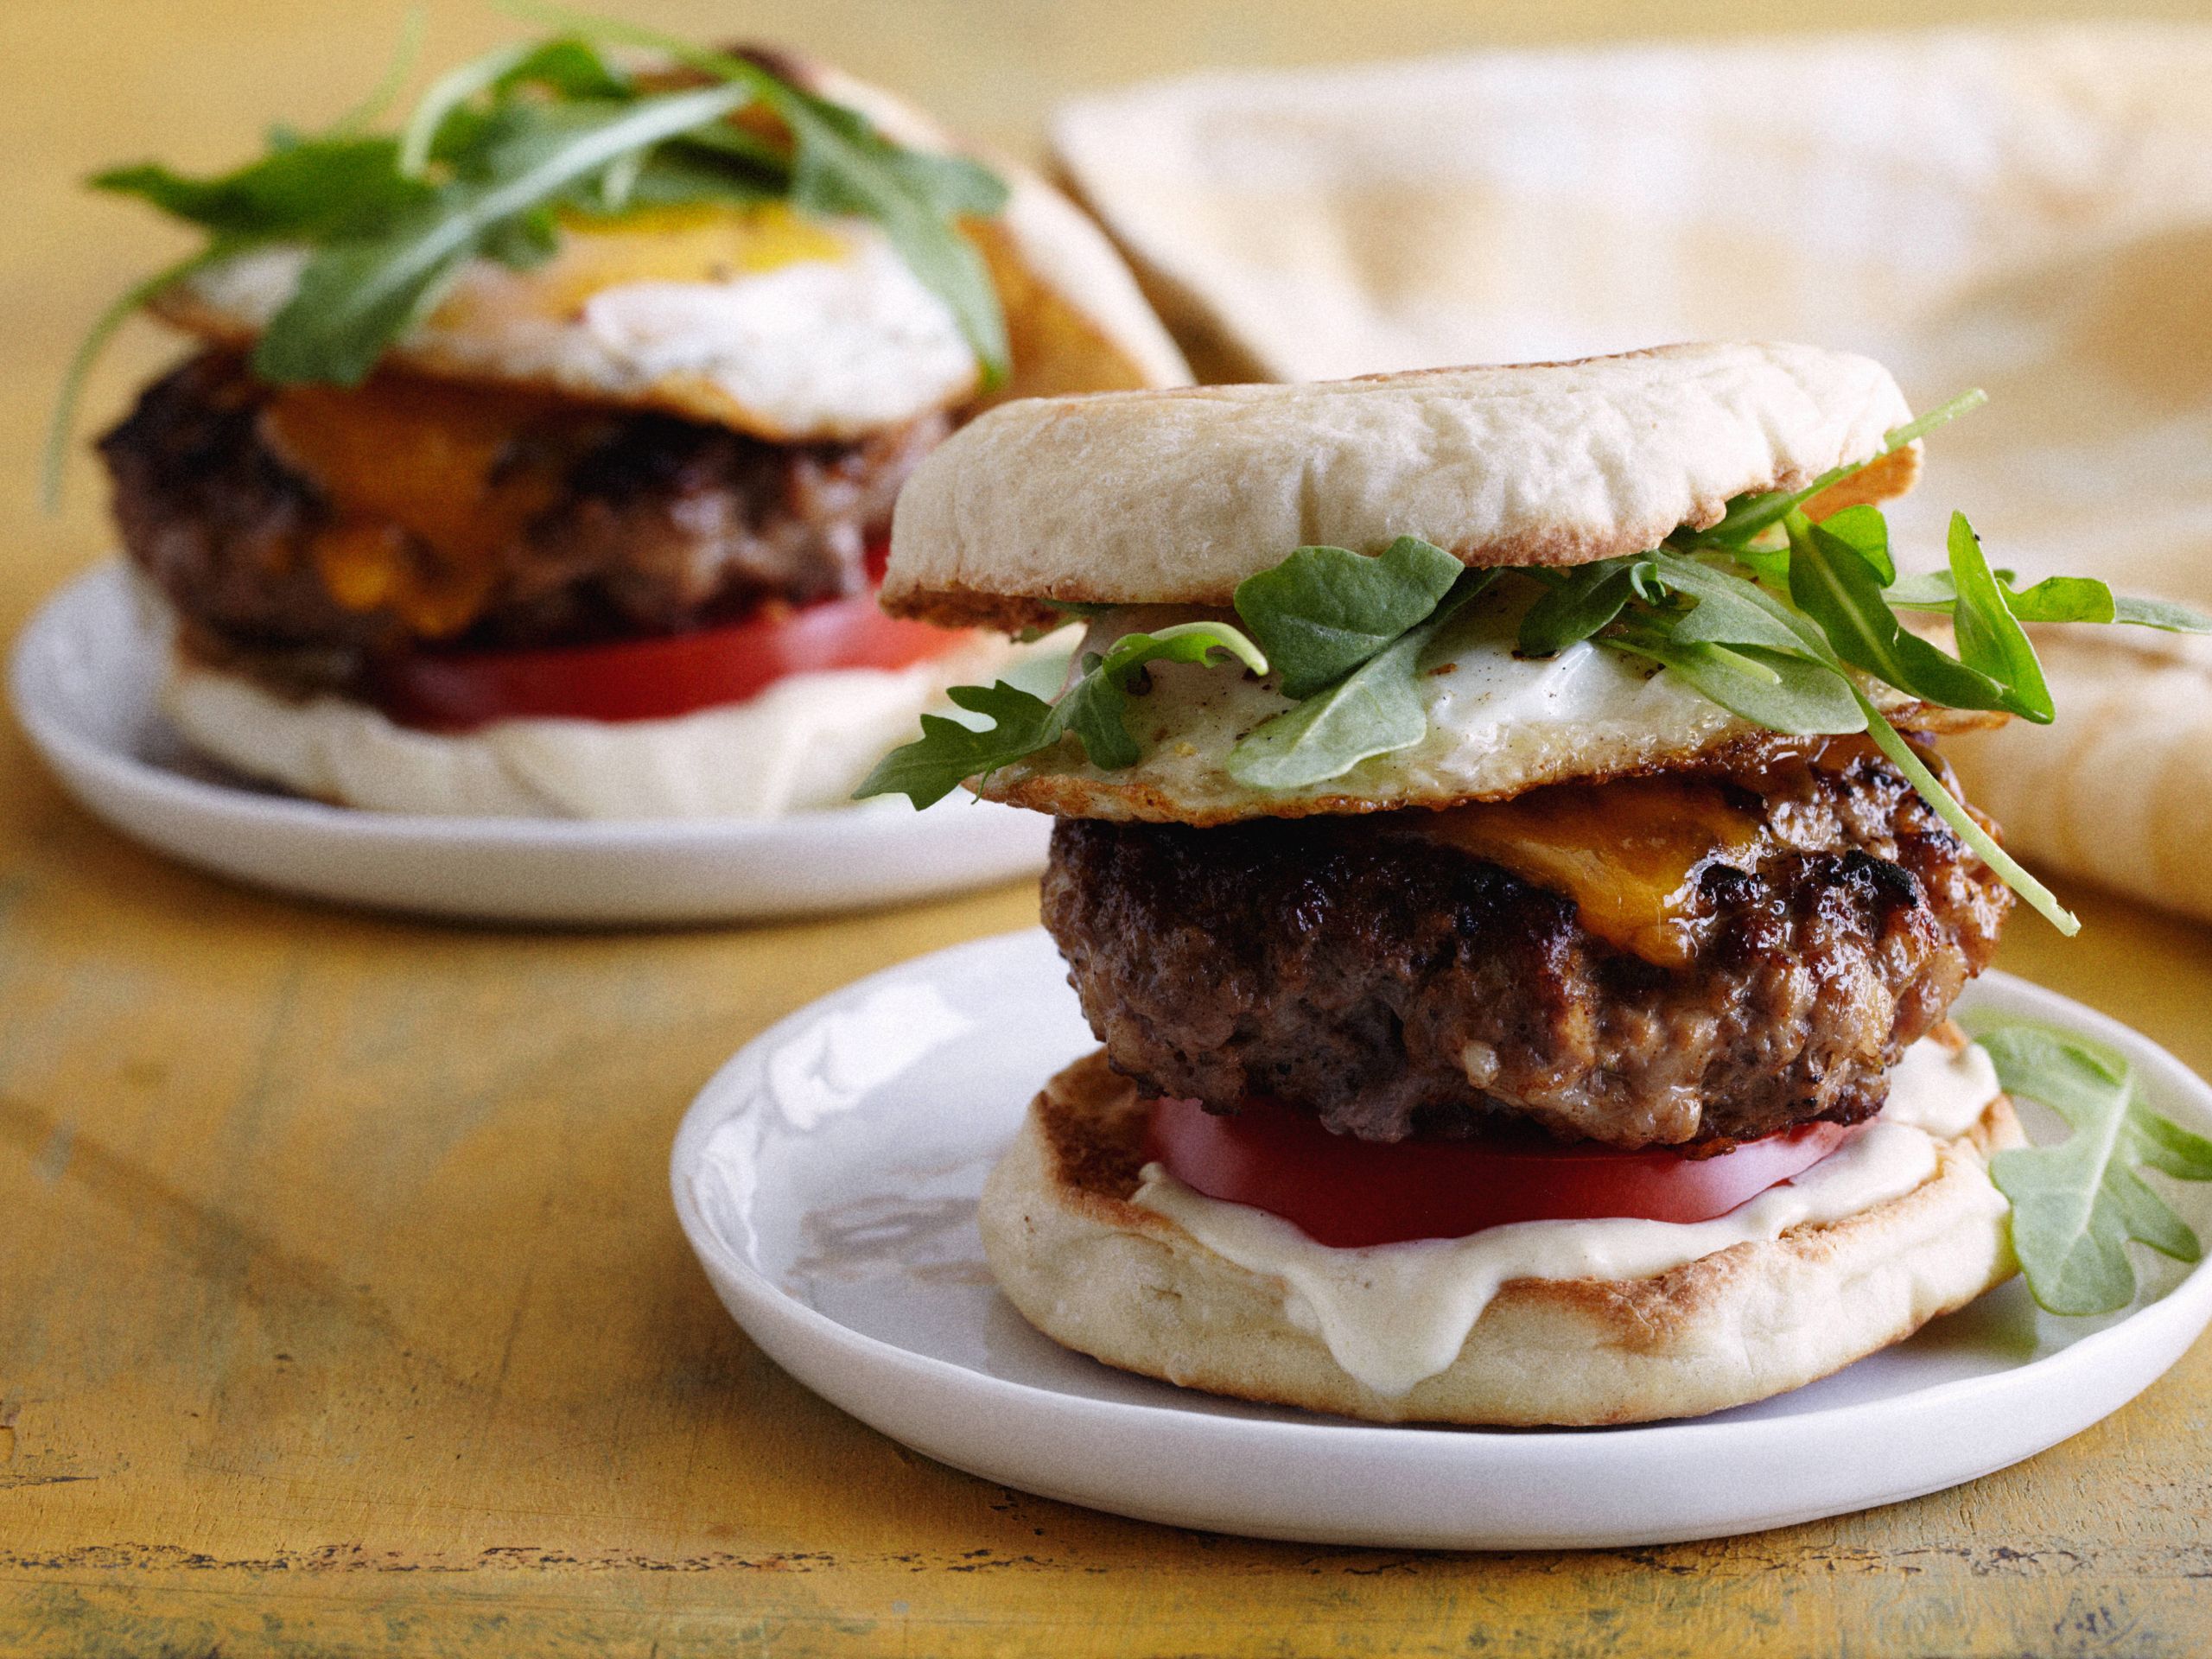 Brunch Desserts Food Network
 Breakfast Burgers Recipe Inspired by Food Network’s